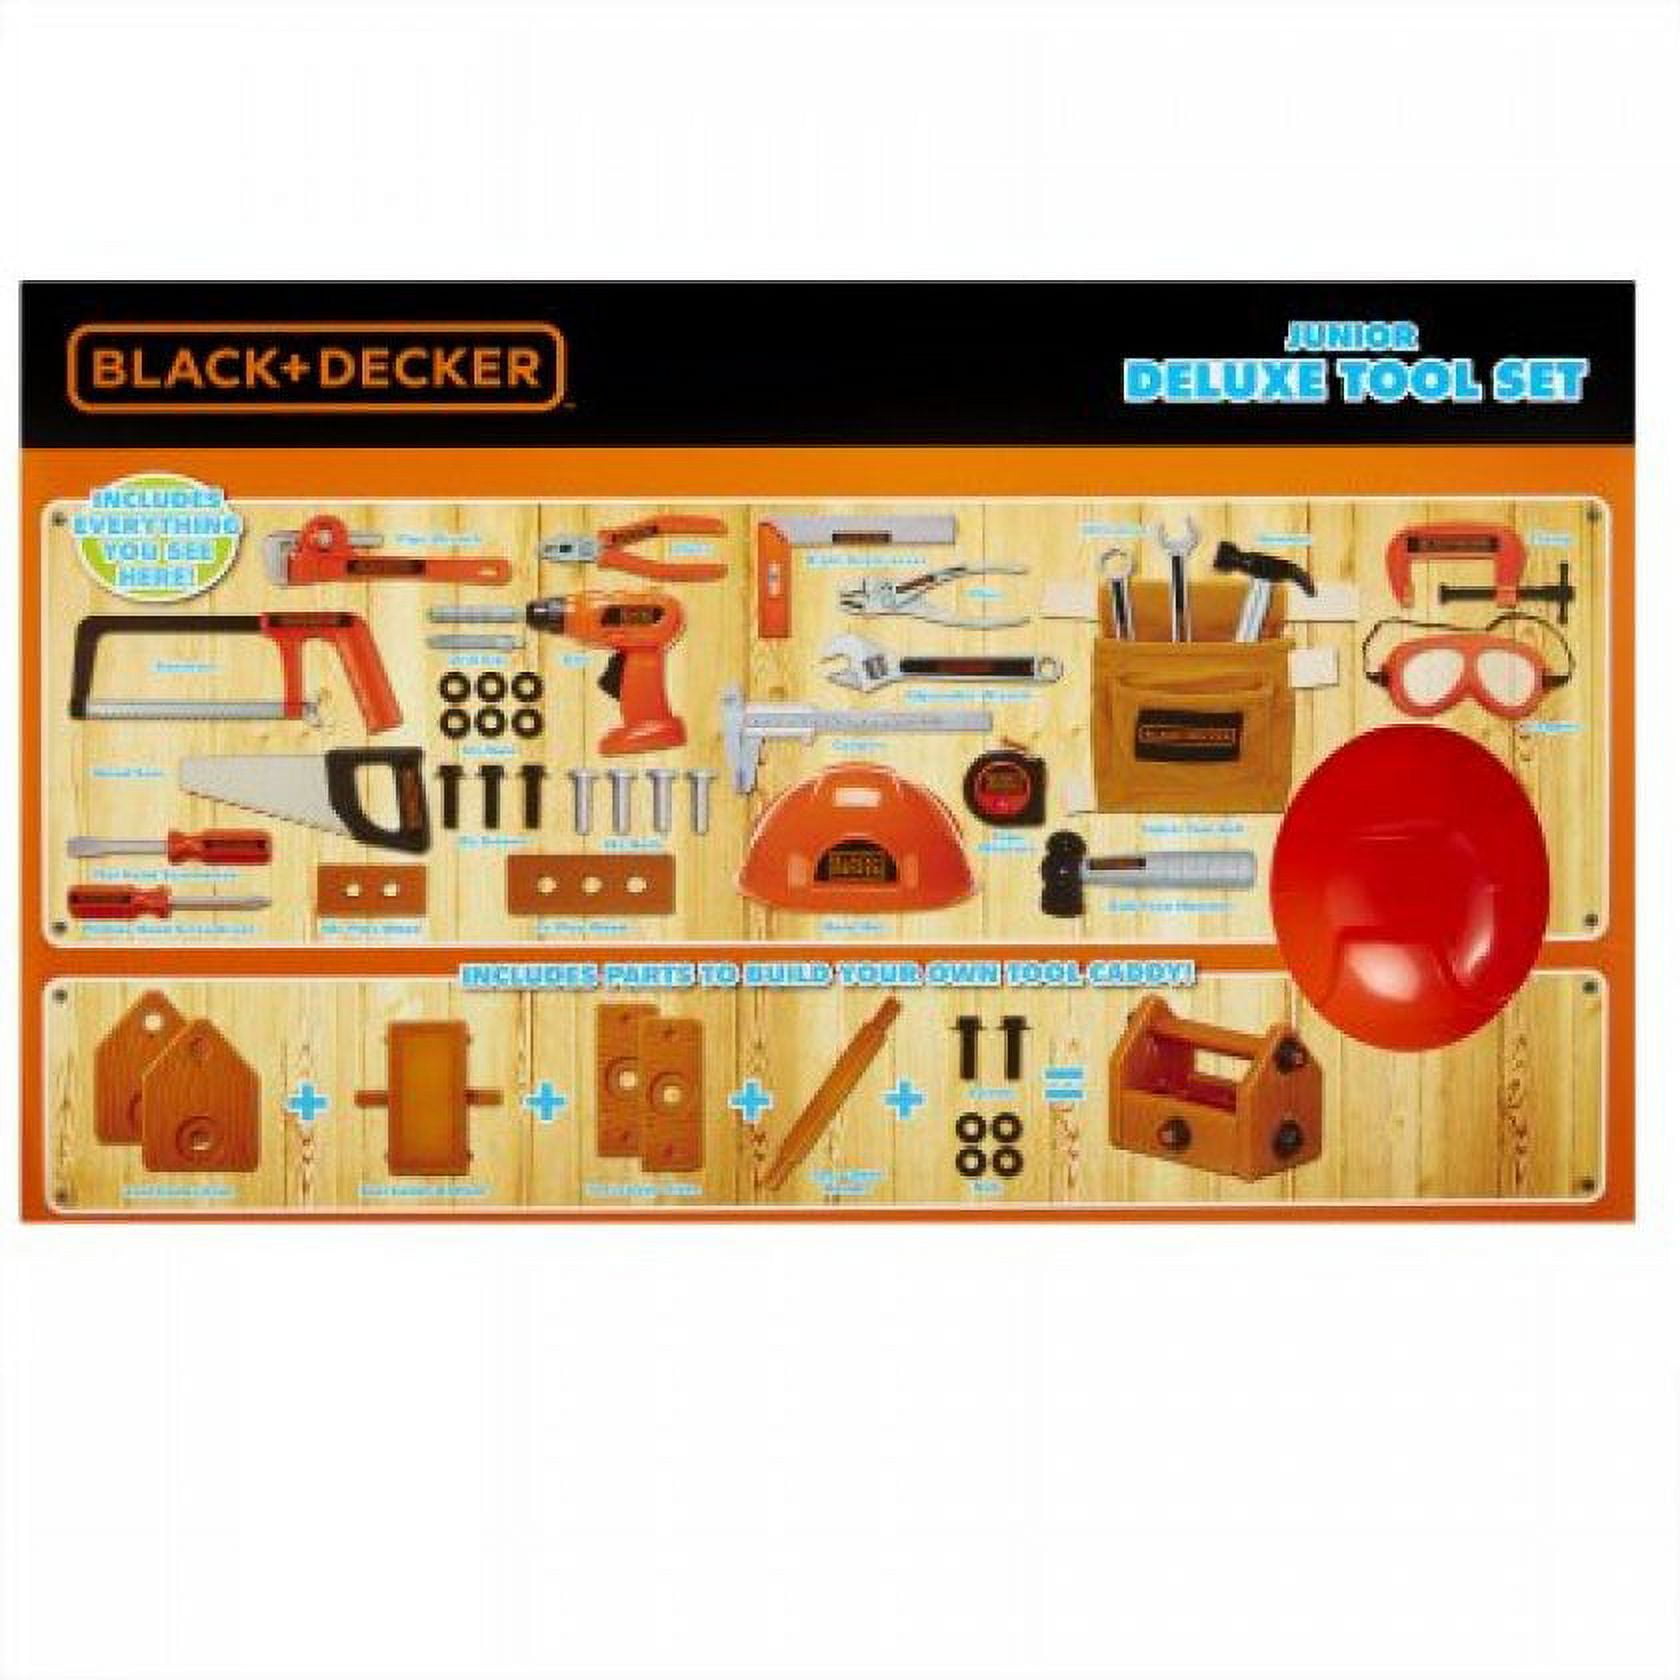 Black+decker Junior Deluxe Tool Play Set - 85pc